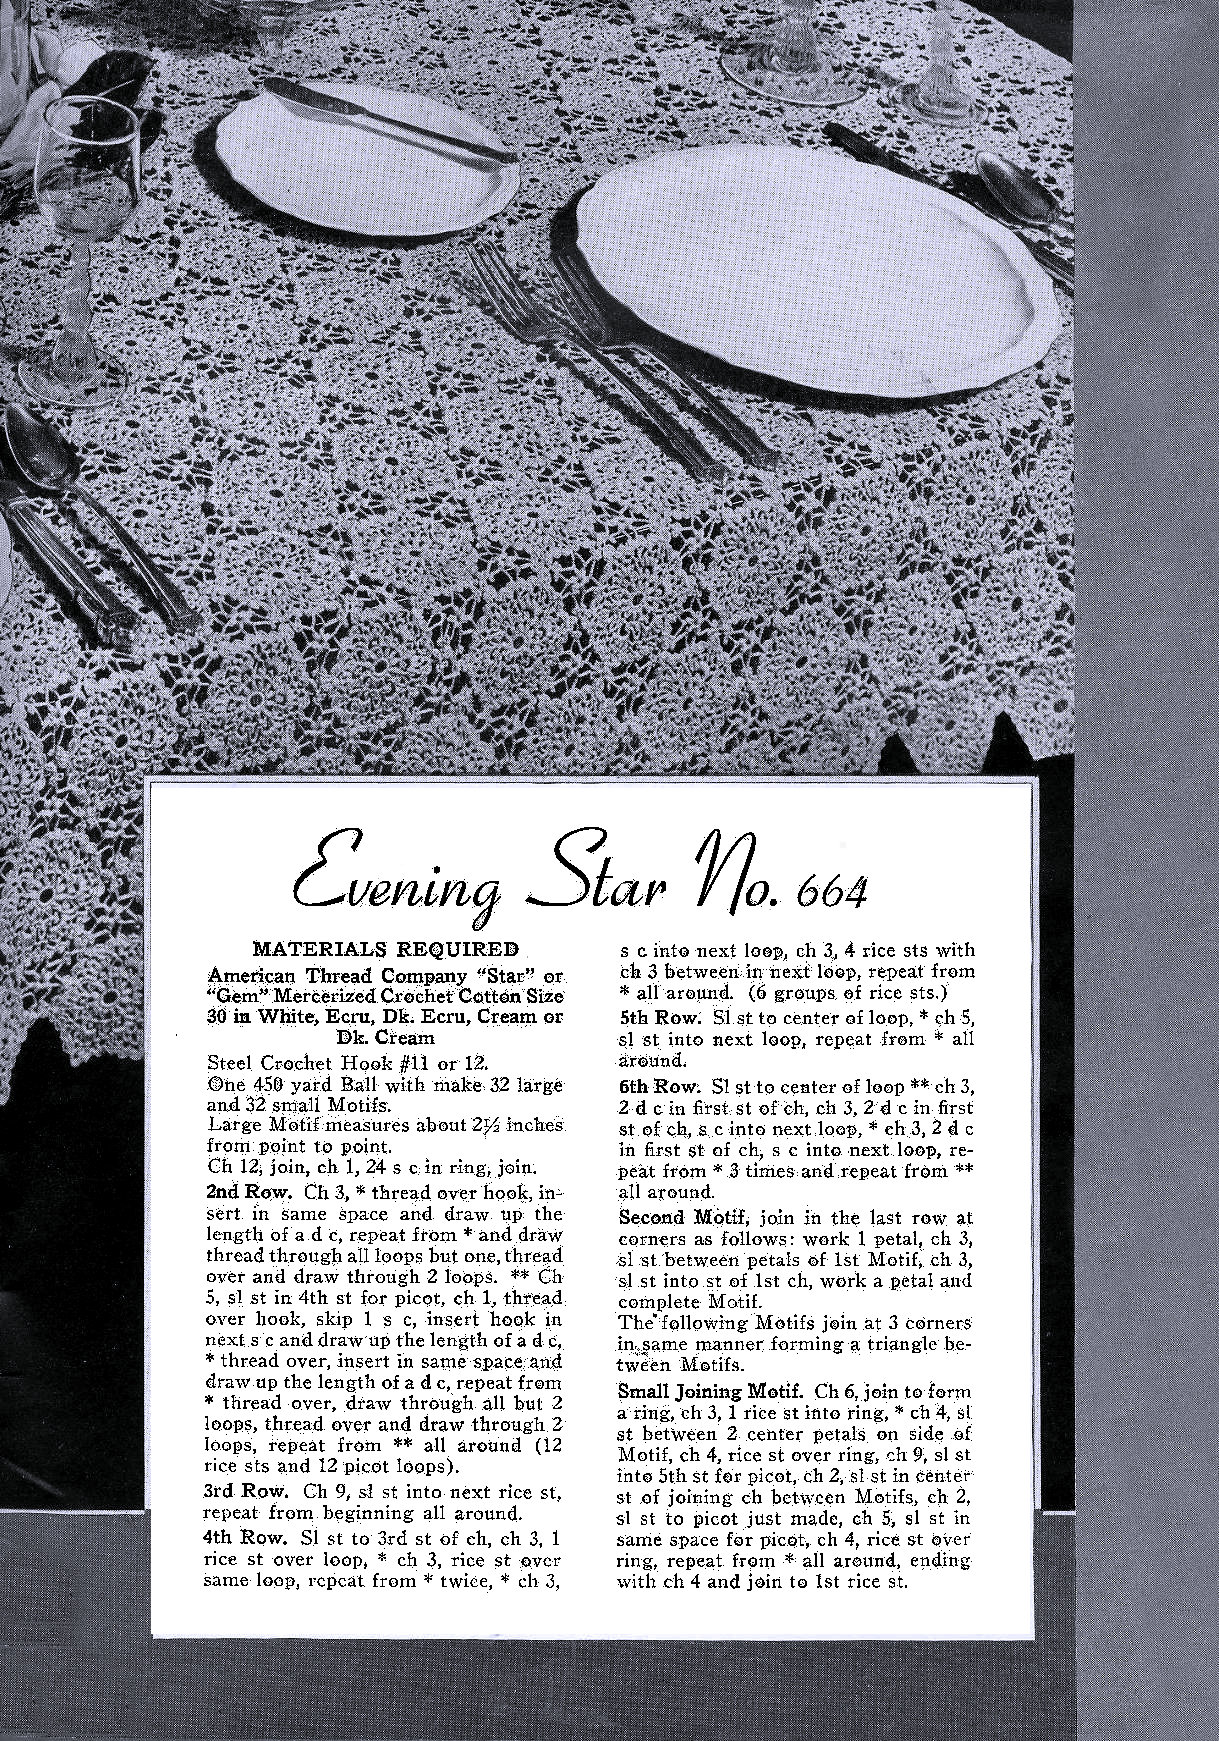 Evening Star Table Cloth